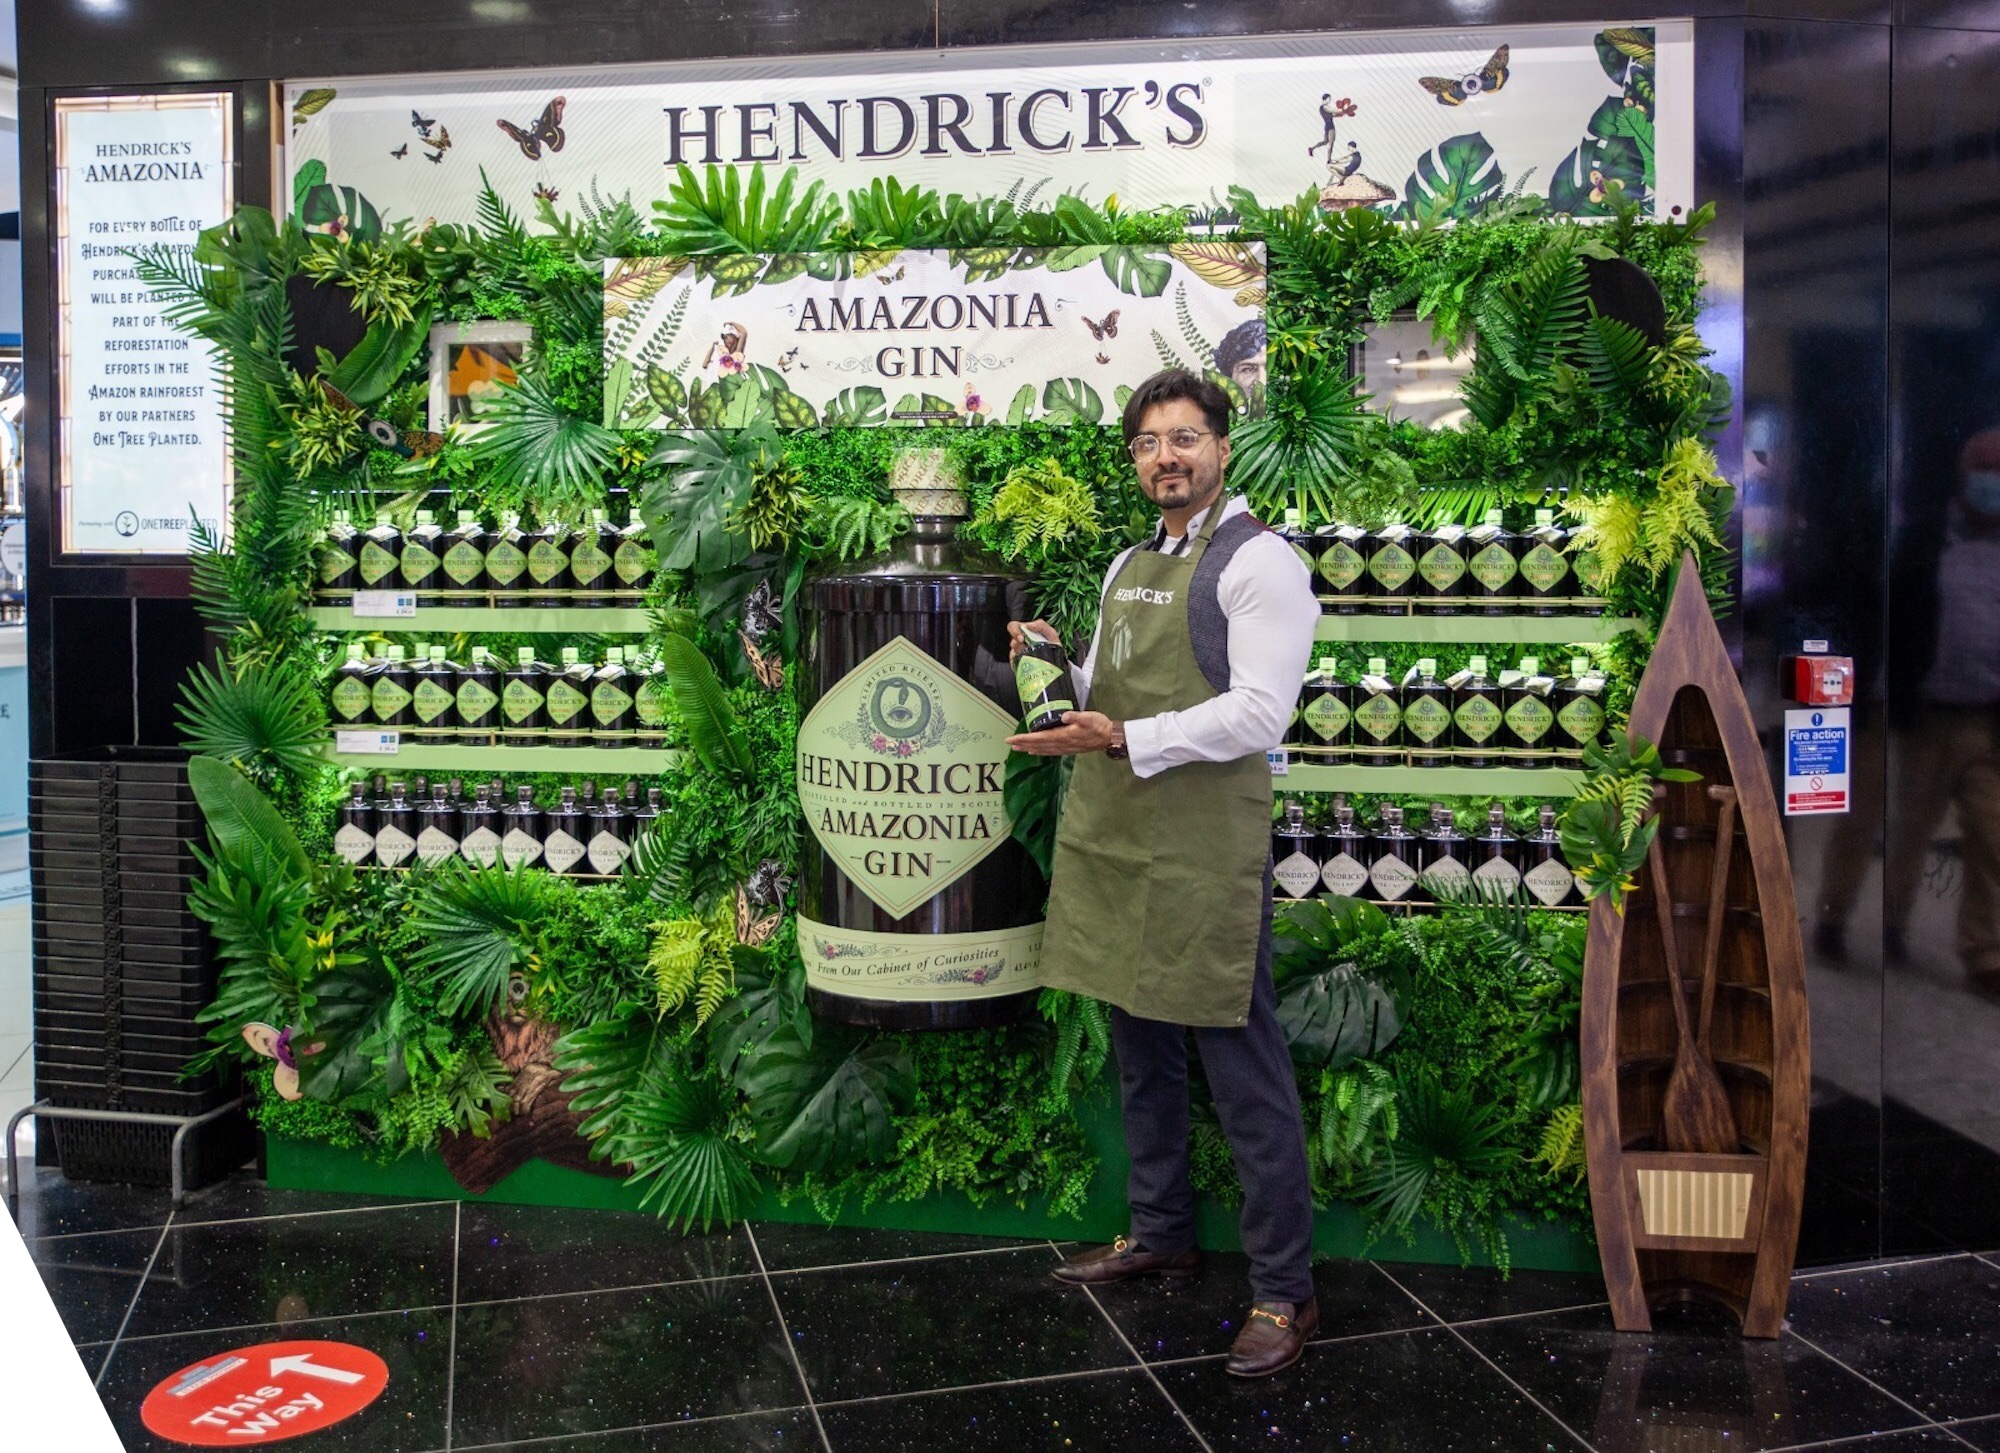 Hendricks amazonia gin POS display conception and design